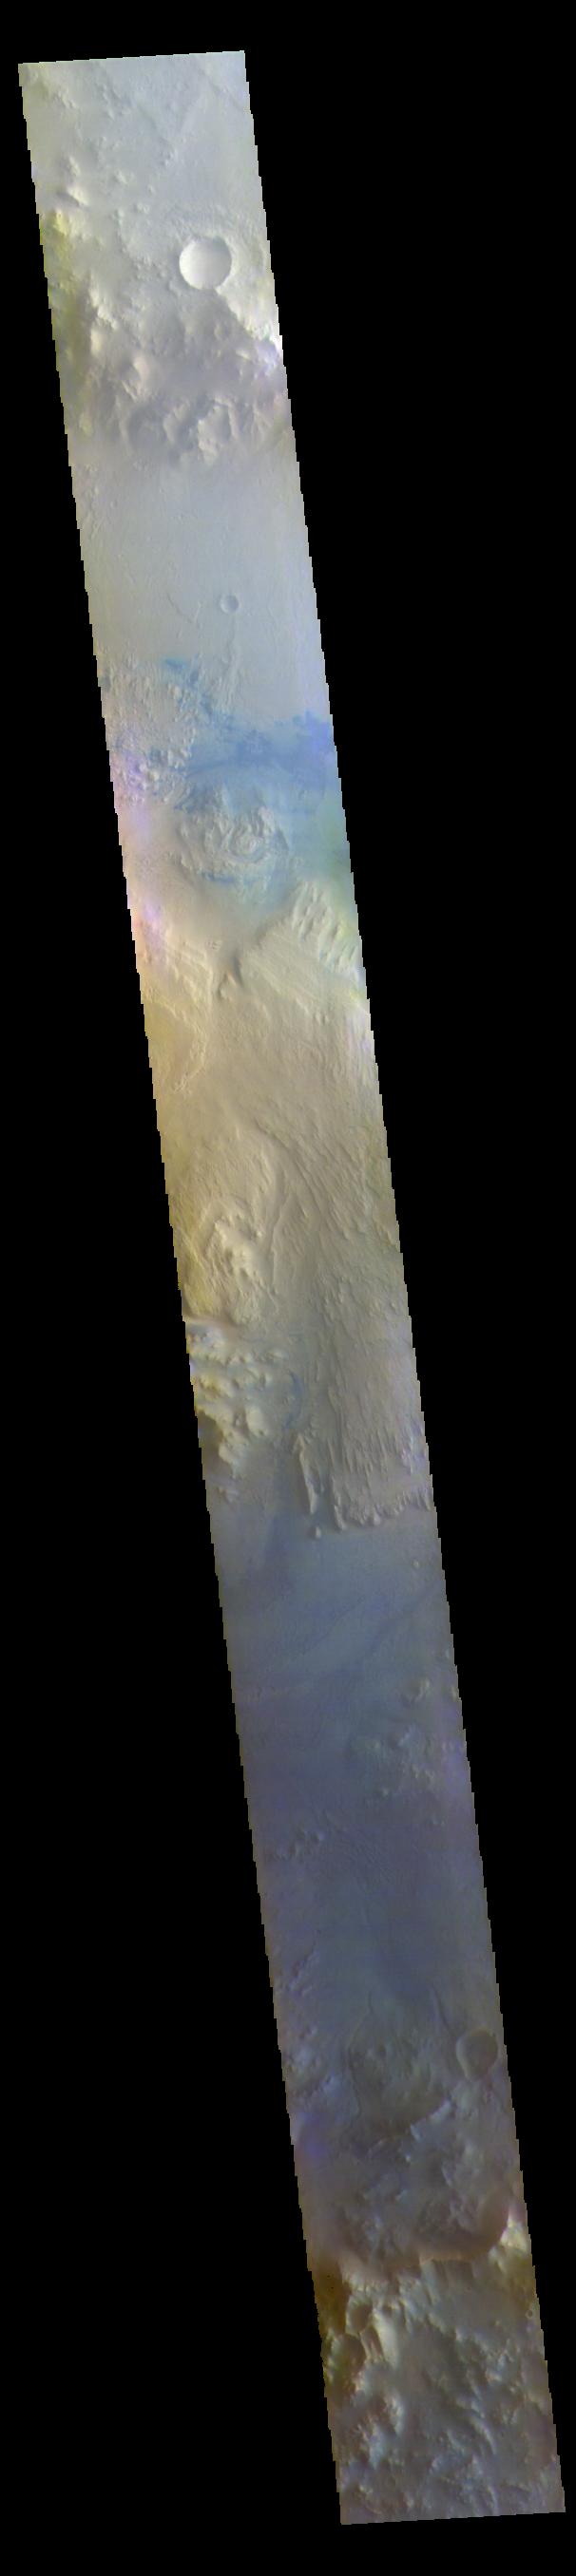 PIA25092: Gale Crater - False Color